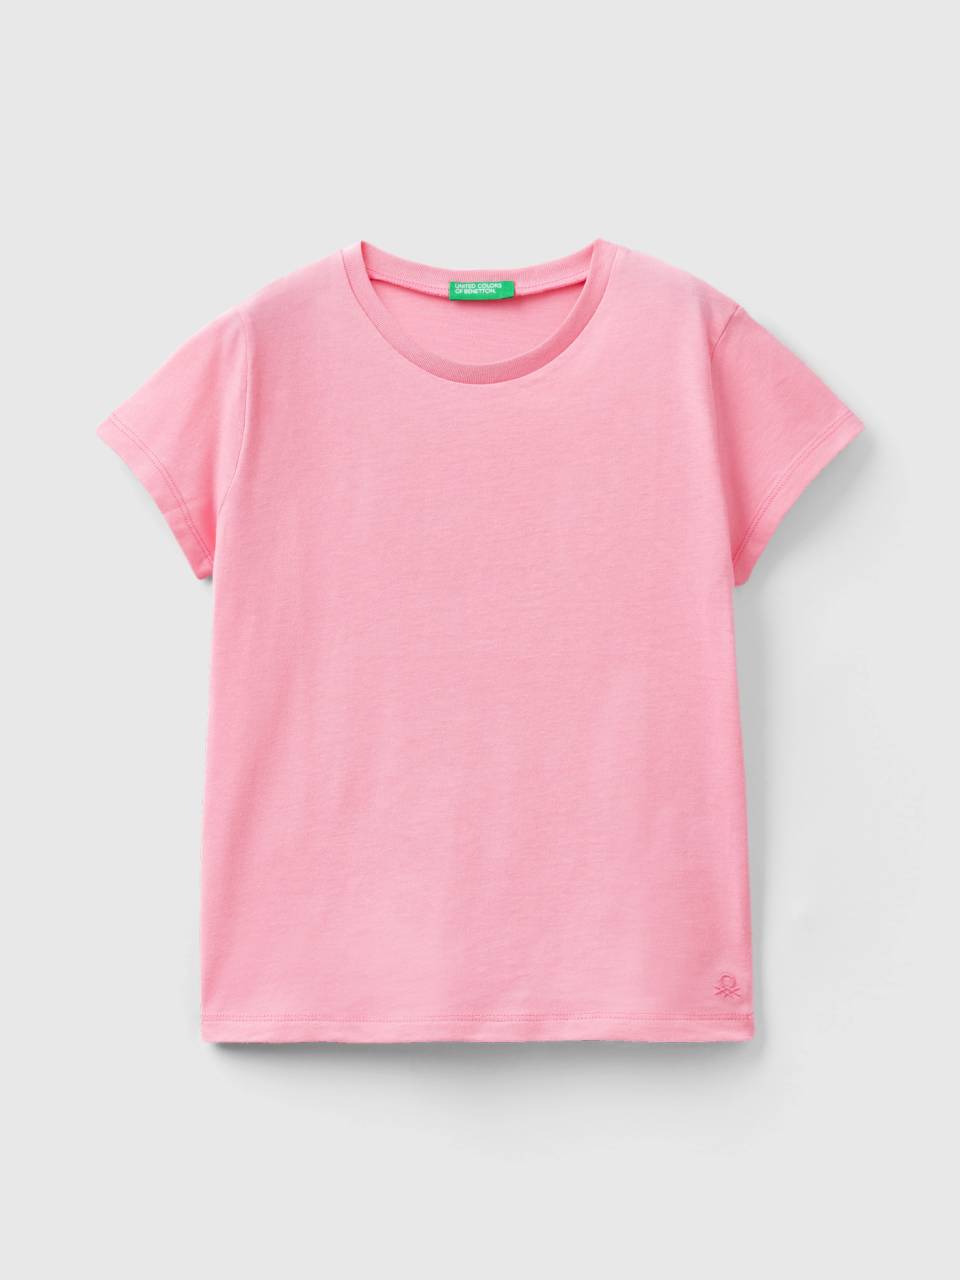 T-shirt in | organic Pink cotton - pure Benetton